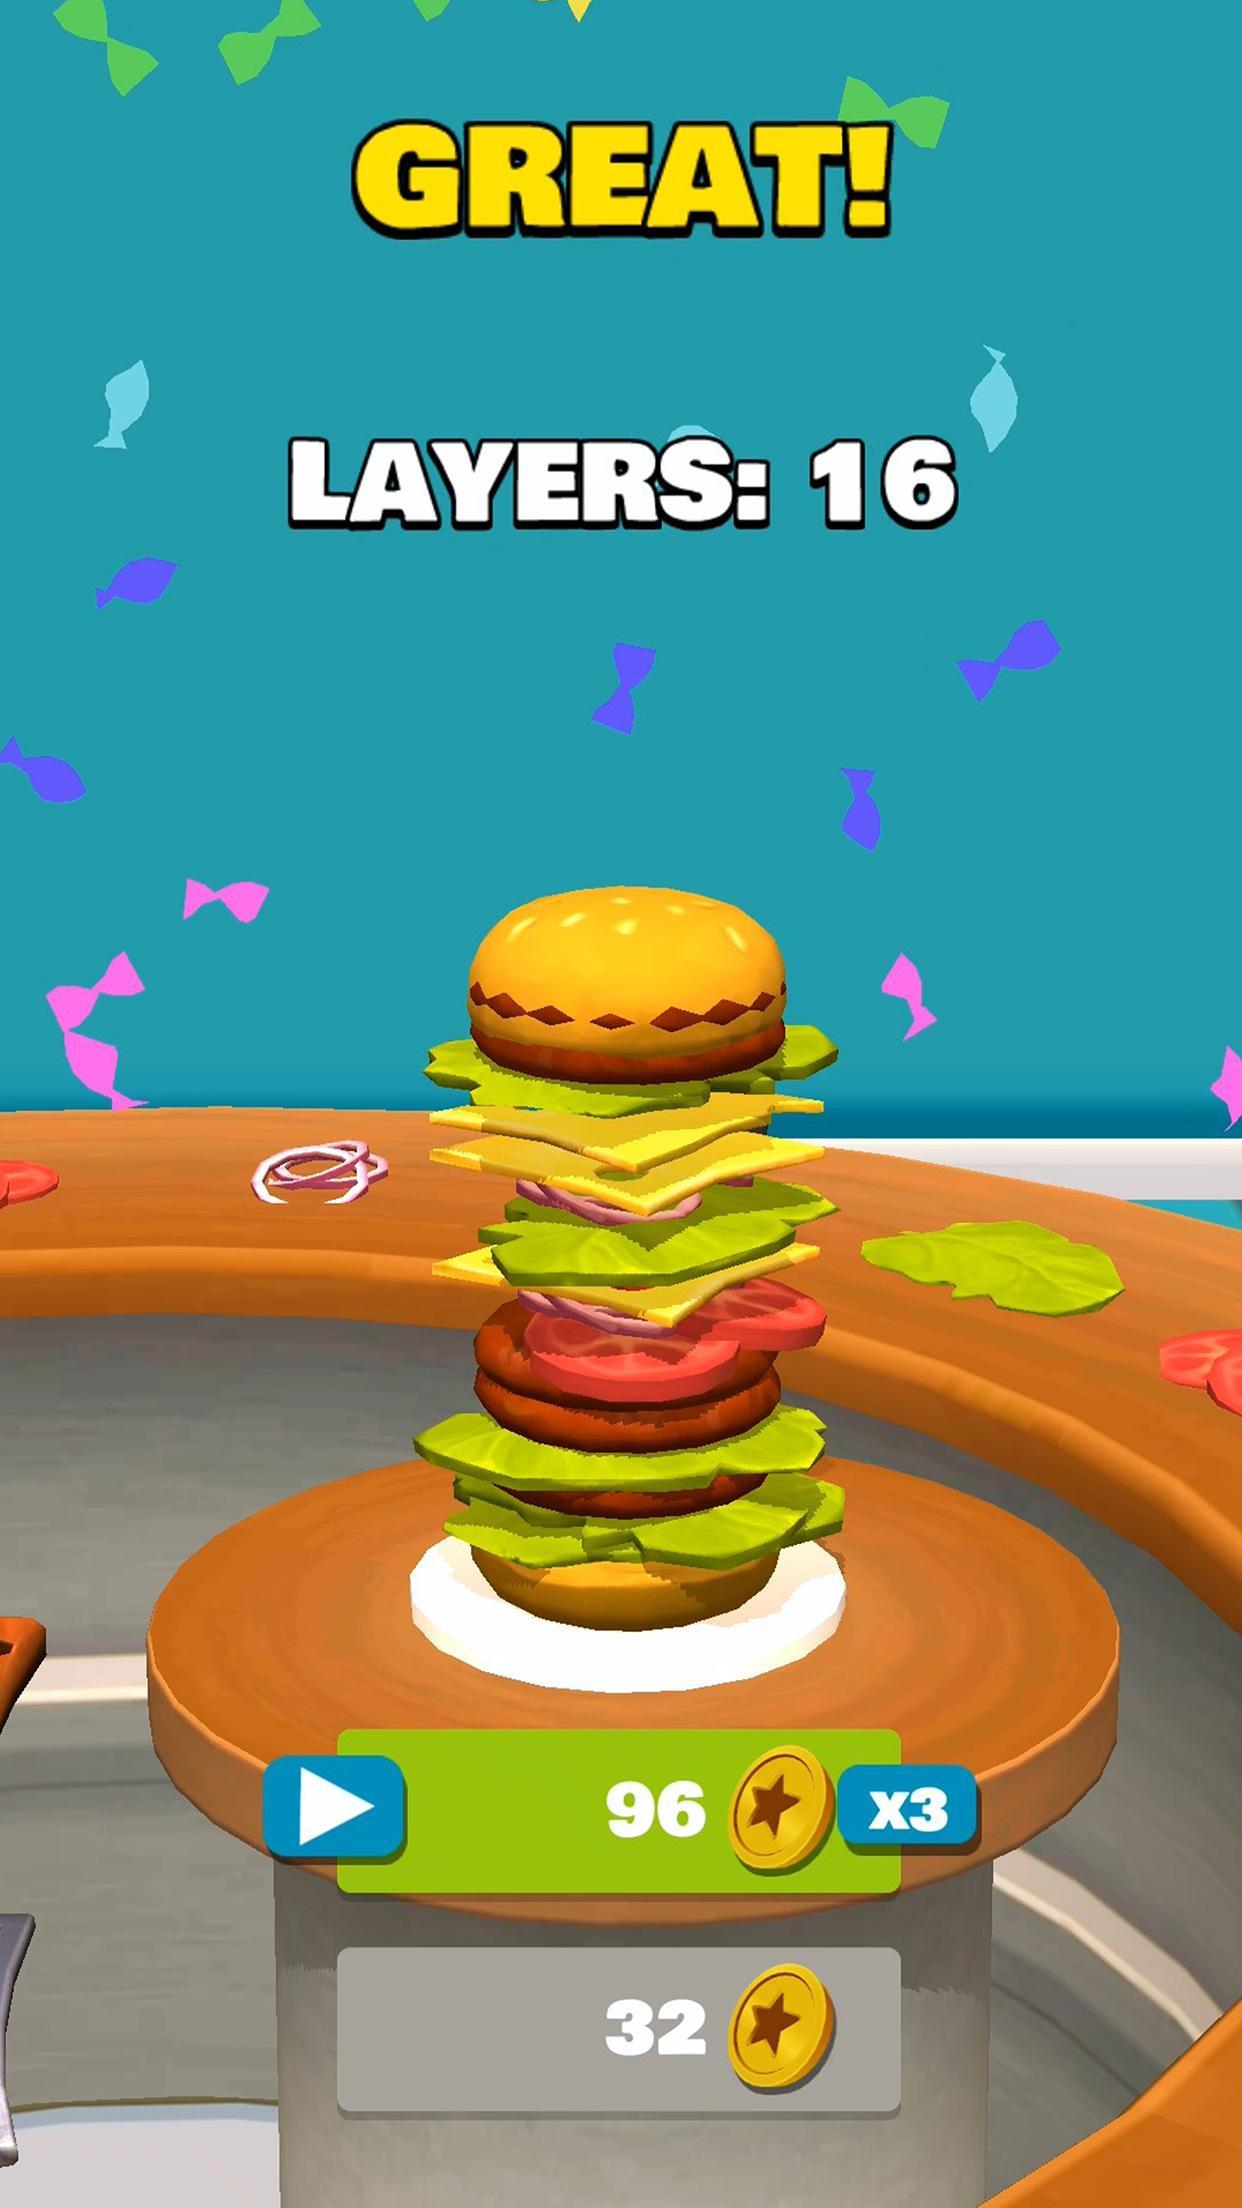 Cuisine Machine For Android Apk Download - x3 cheeseburger simulator roblox